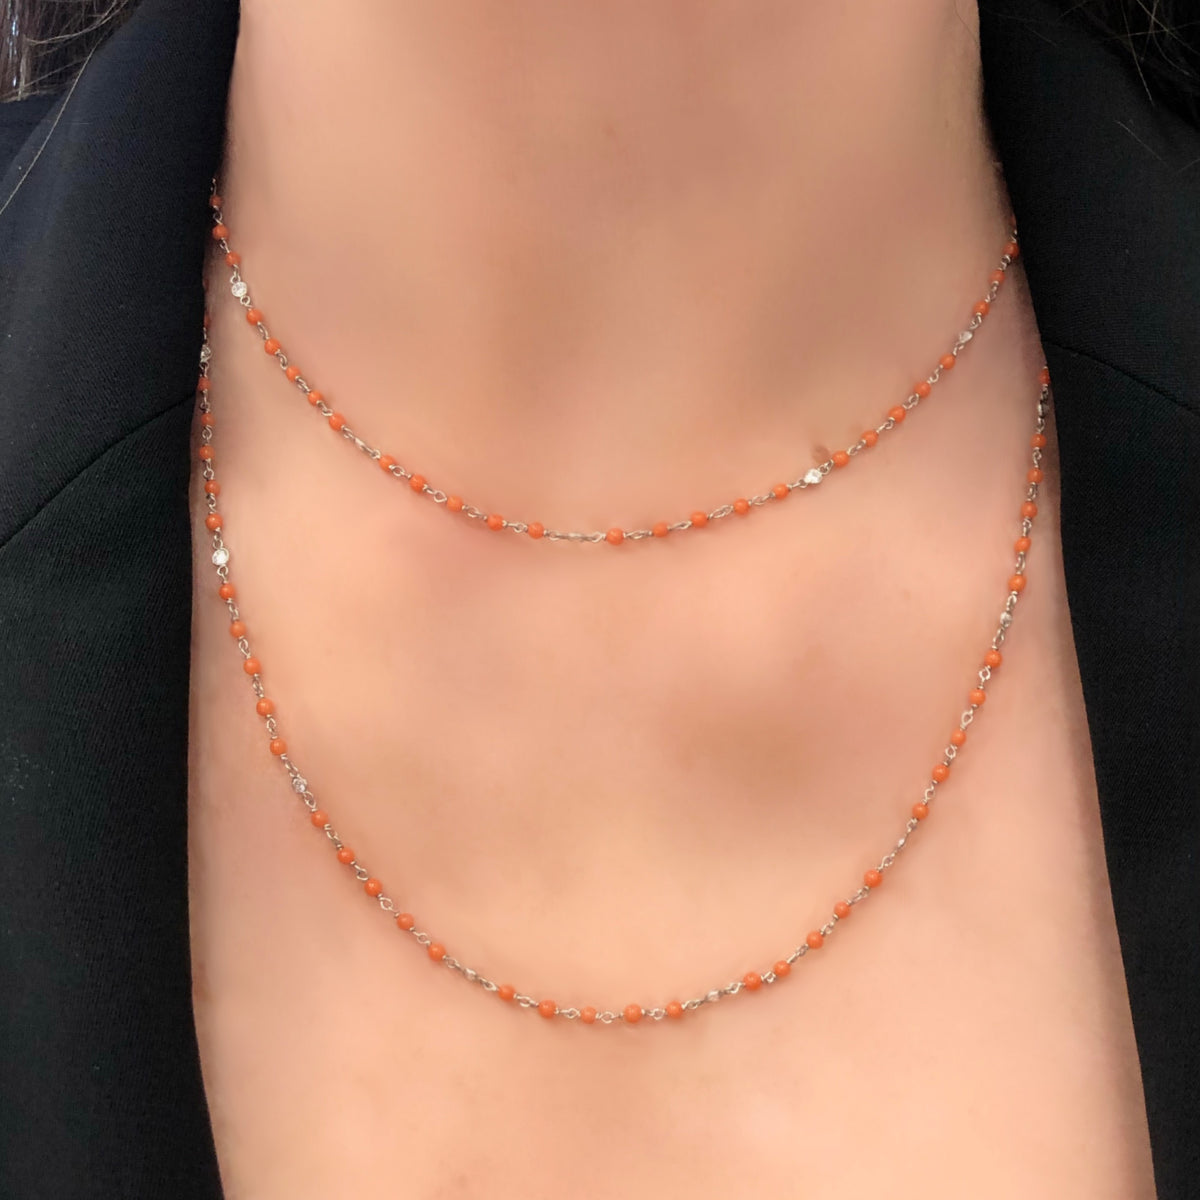 Rosaria-Varra-handmade-platinum-diamond-and-coral-bead-opera-necklace-model-2-view-2000x2000